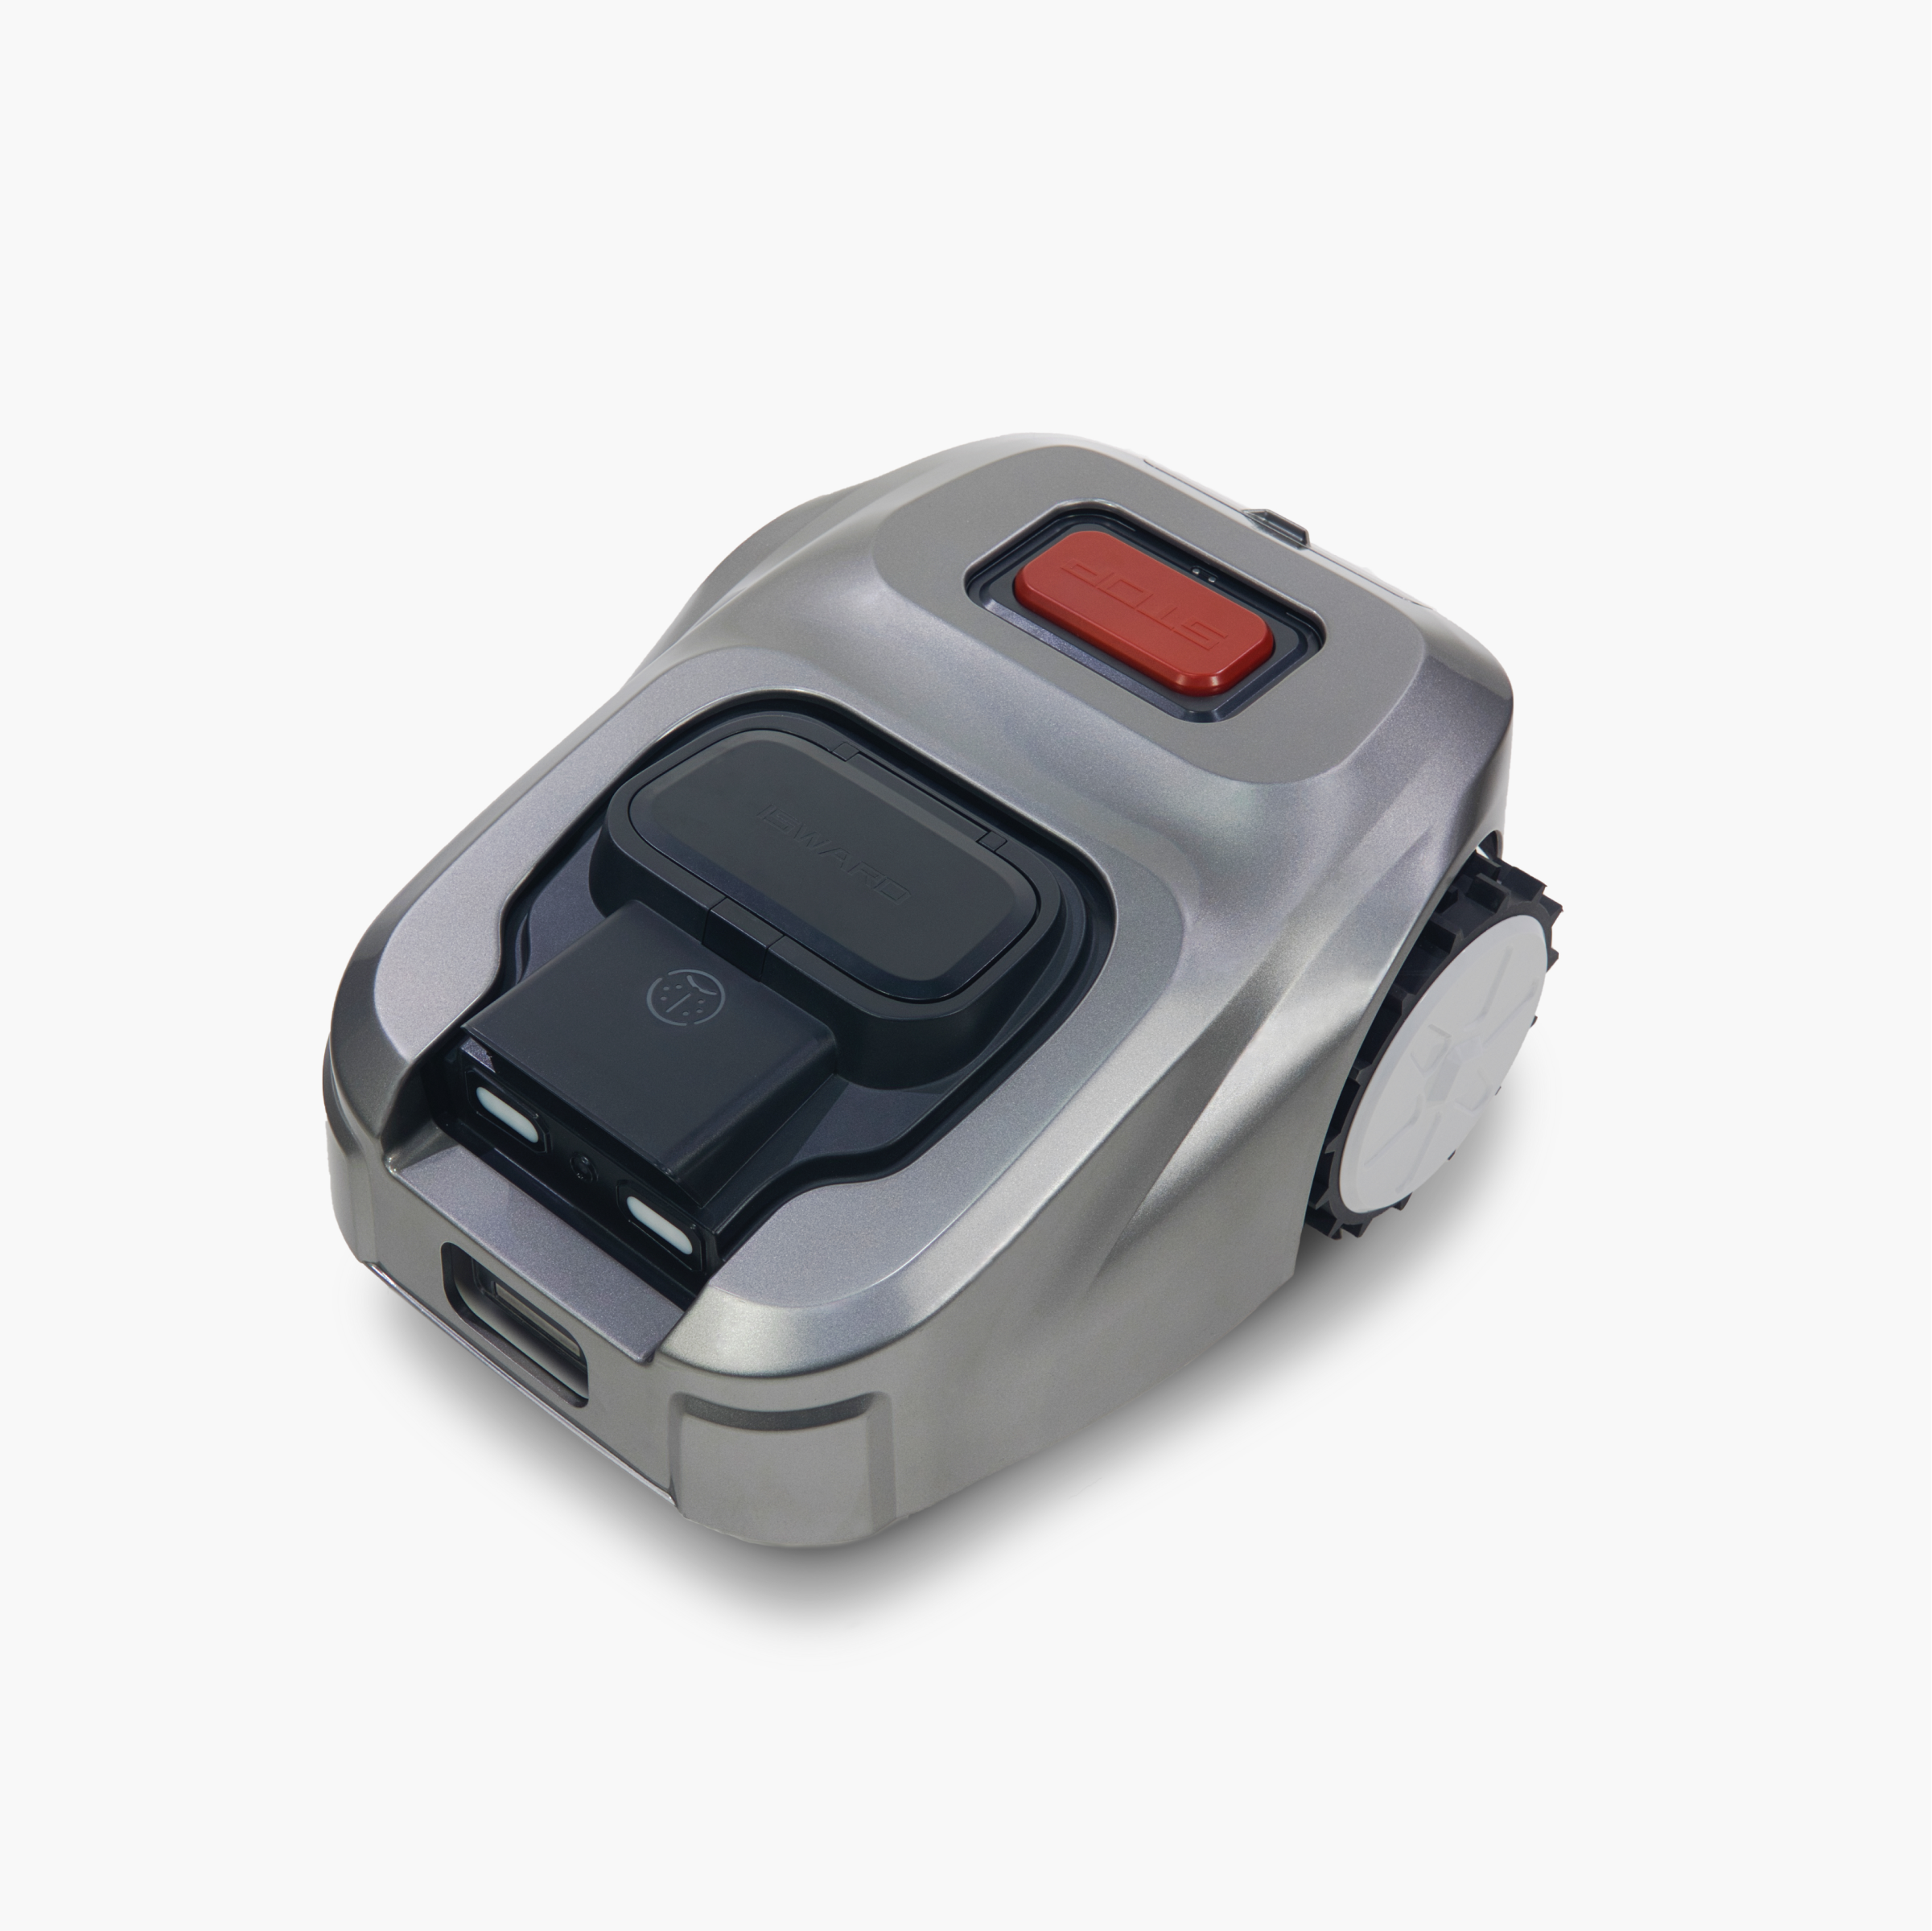 ISWARD® G10 Wireless Robot Lawn Mower l 0.25 Acre